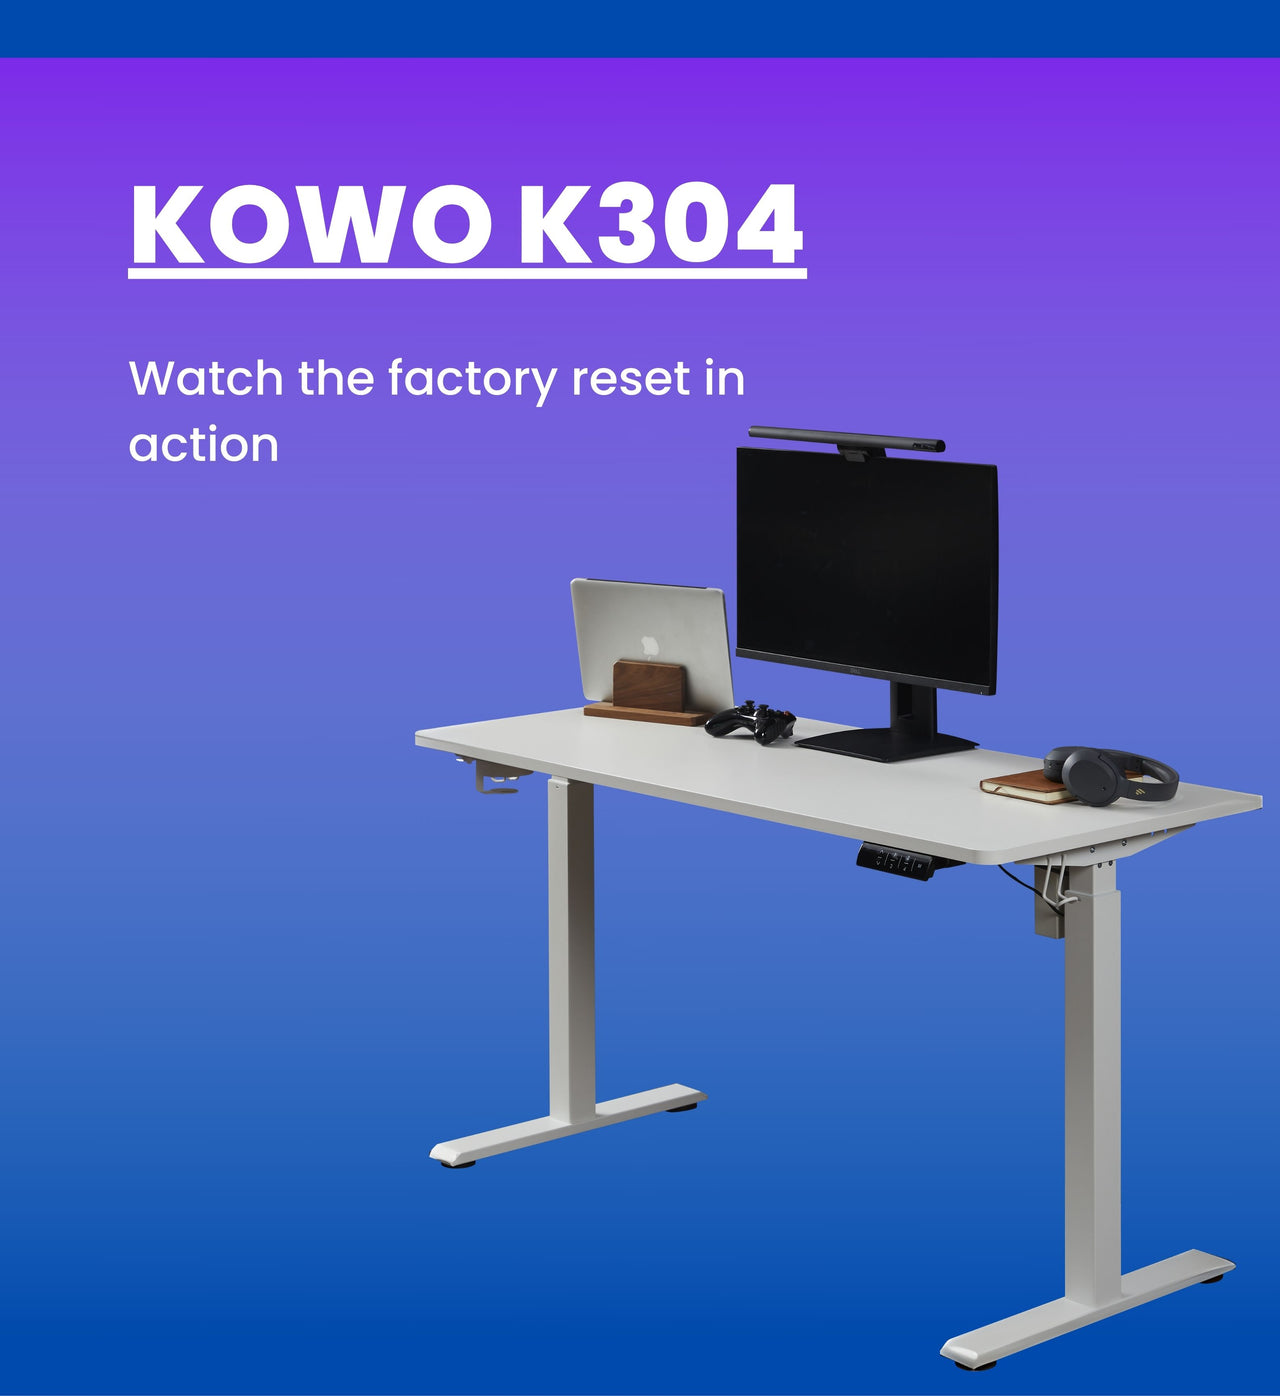 KOWO K304 factory reset demonstration video